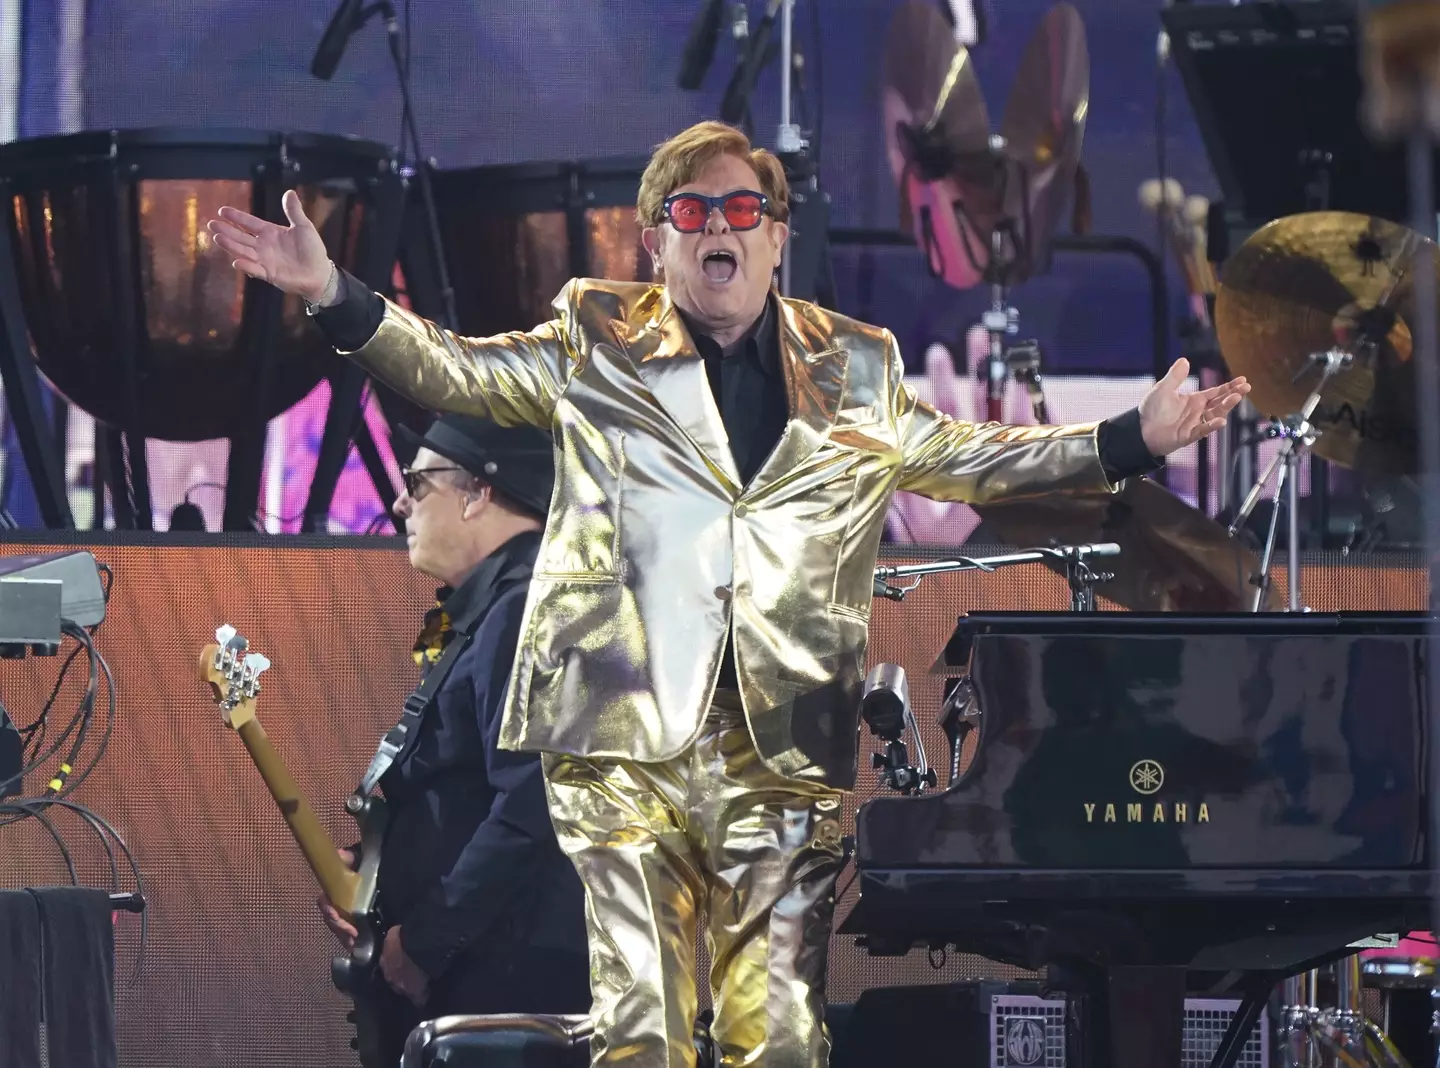 Sir Elton John blew fans away with his incredible headline set.